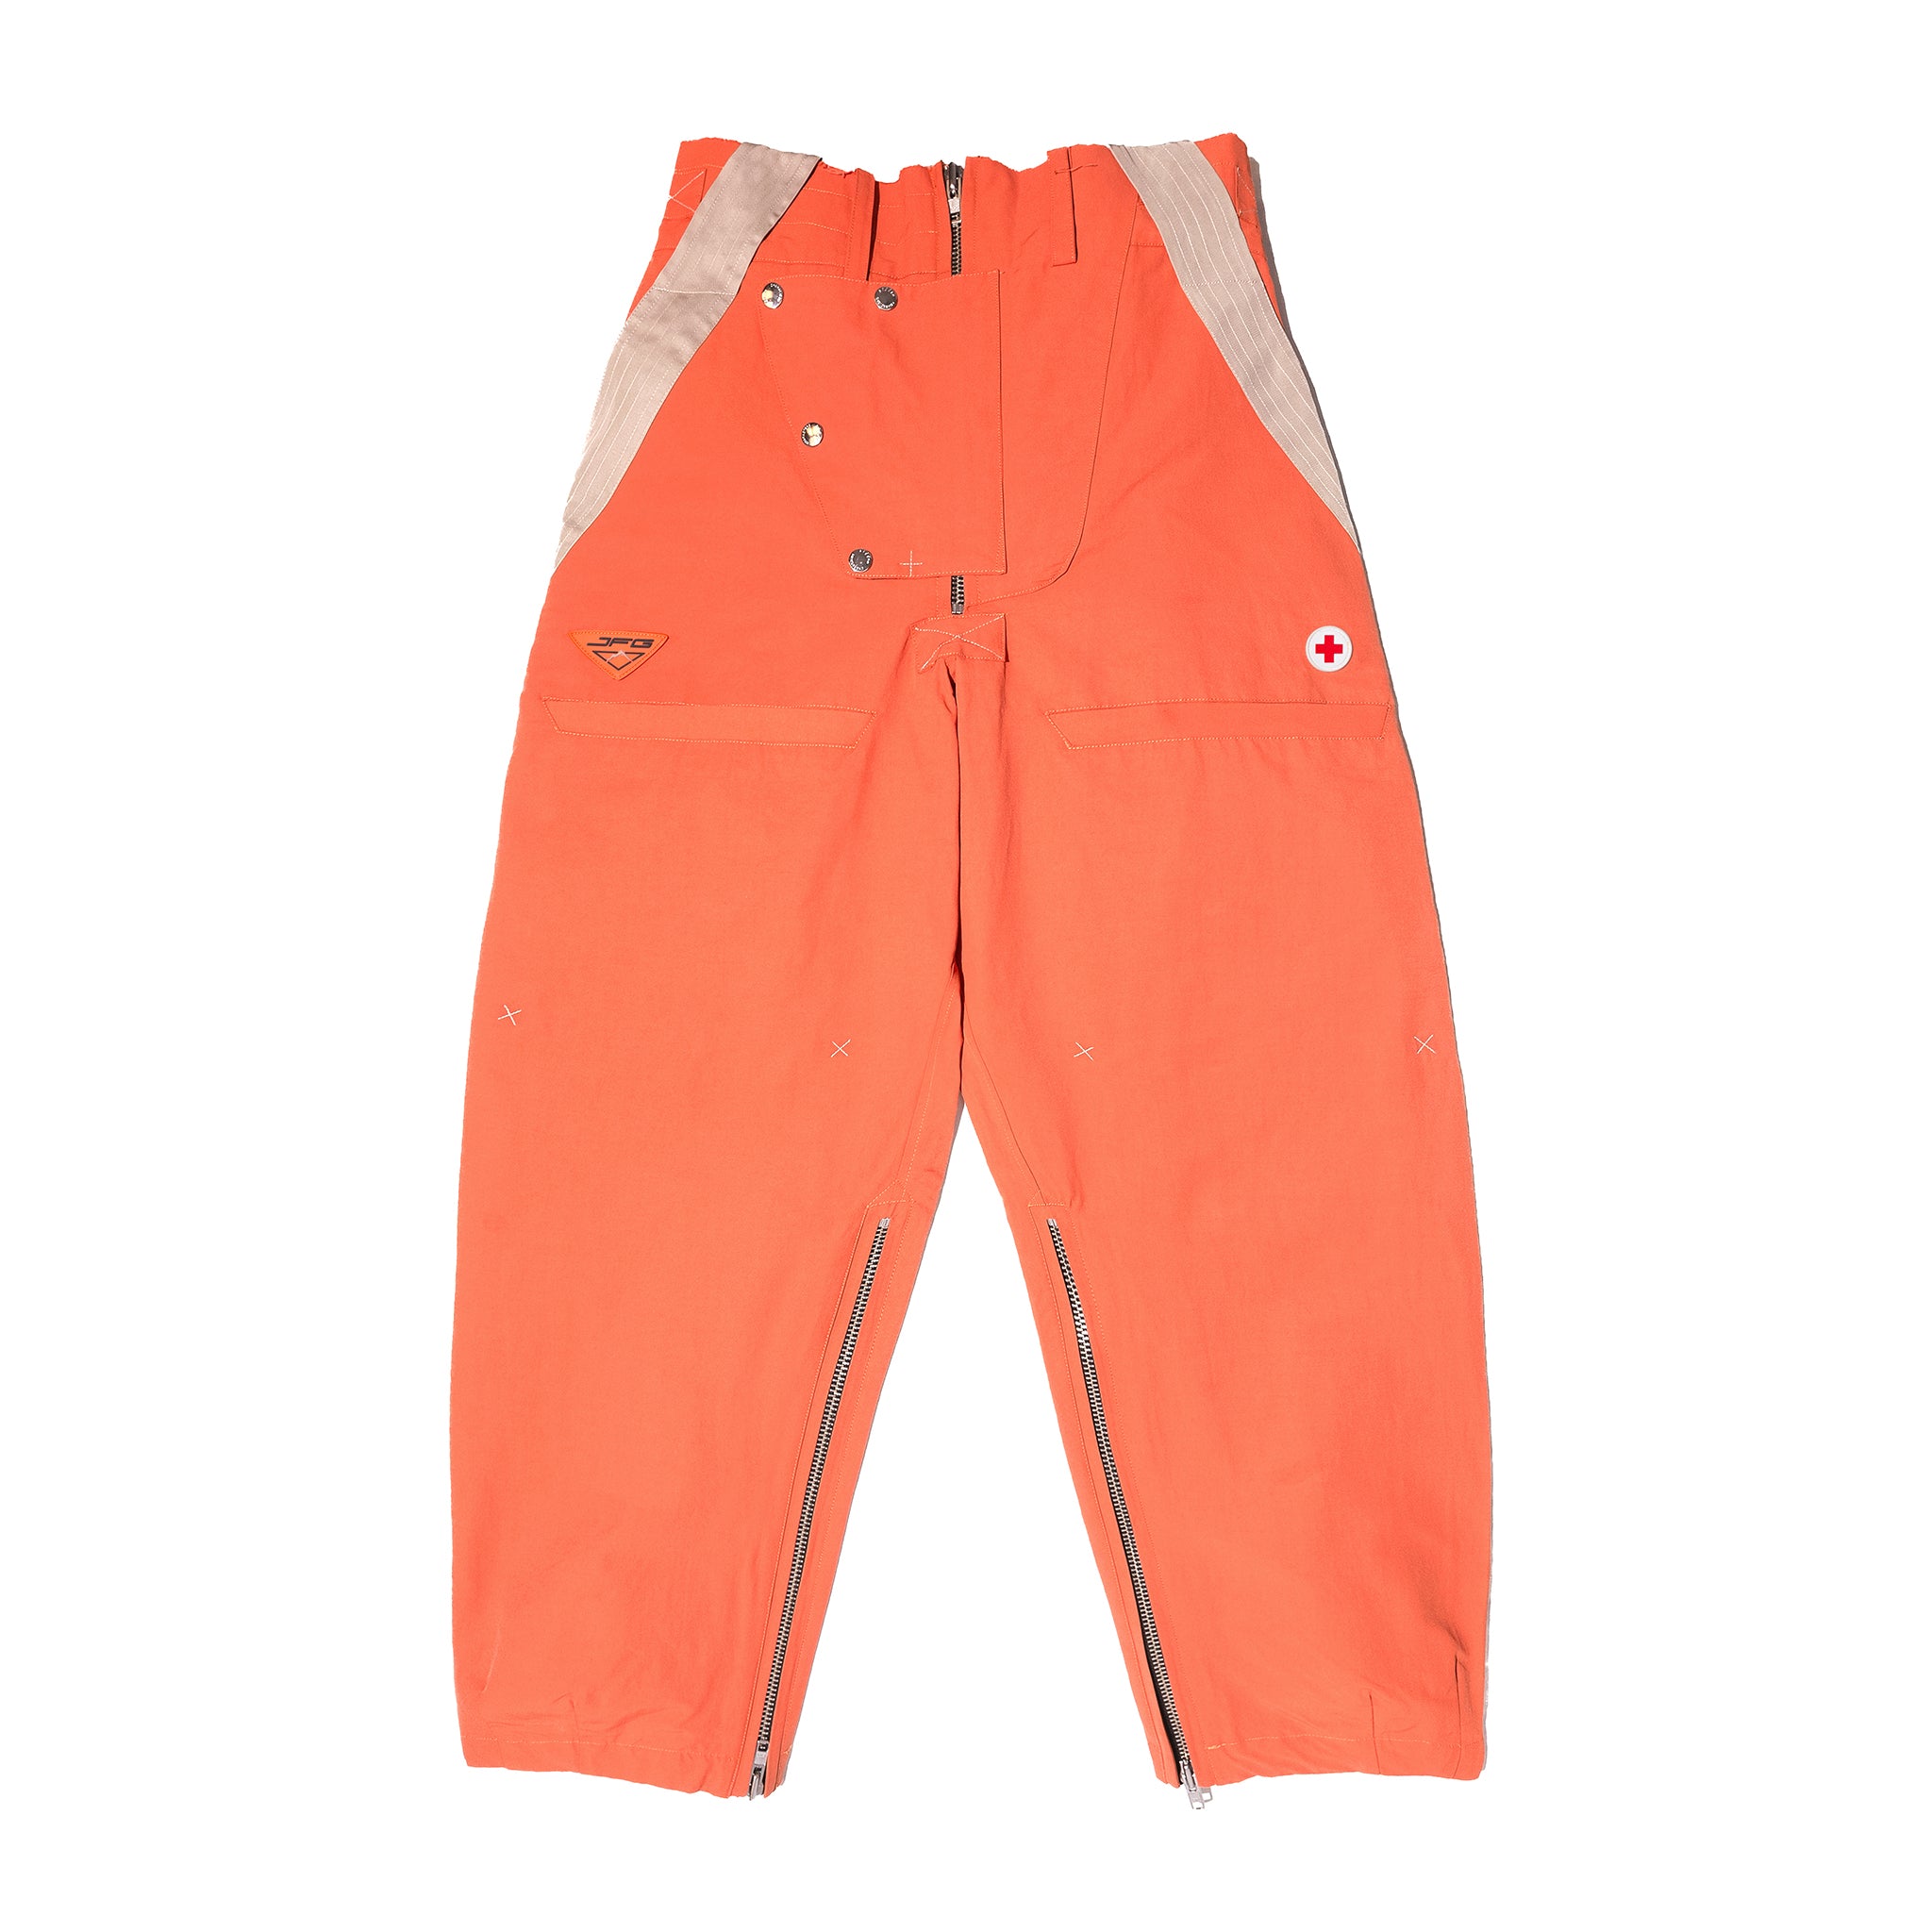 Orange pants